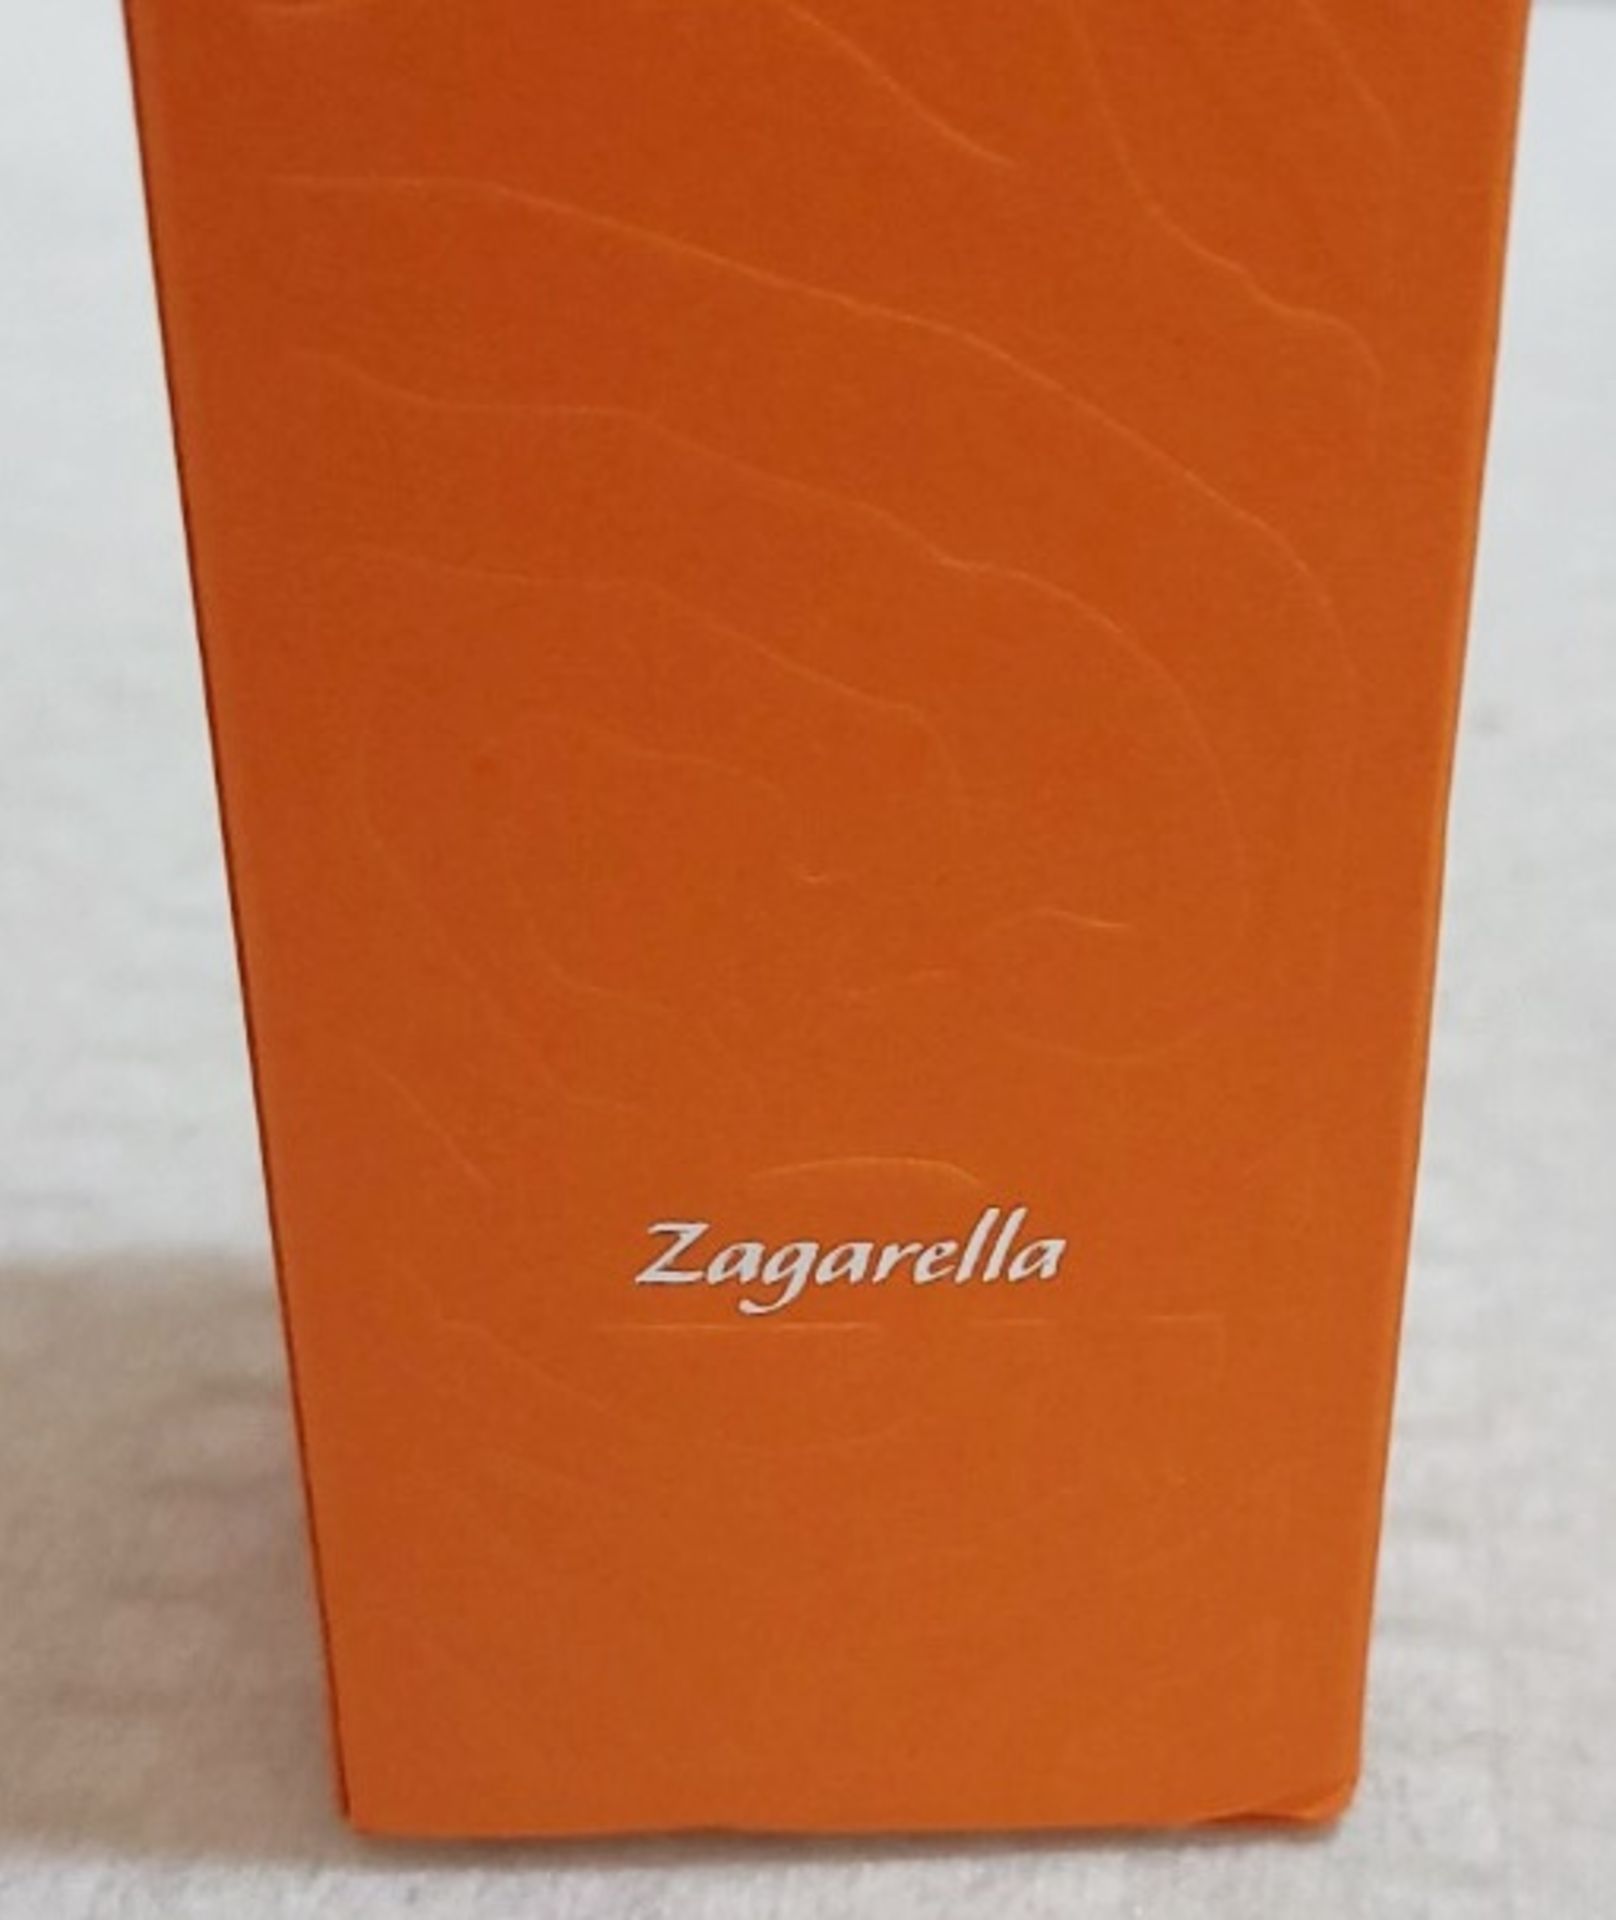 1 x PRATESI 'Celebration 101' Zagarella Luxury Home Scented Spray 100ml - Unused Boxed Stock - Image 2 of 4